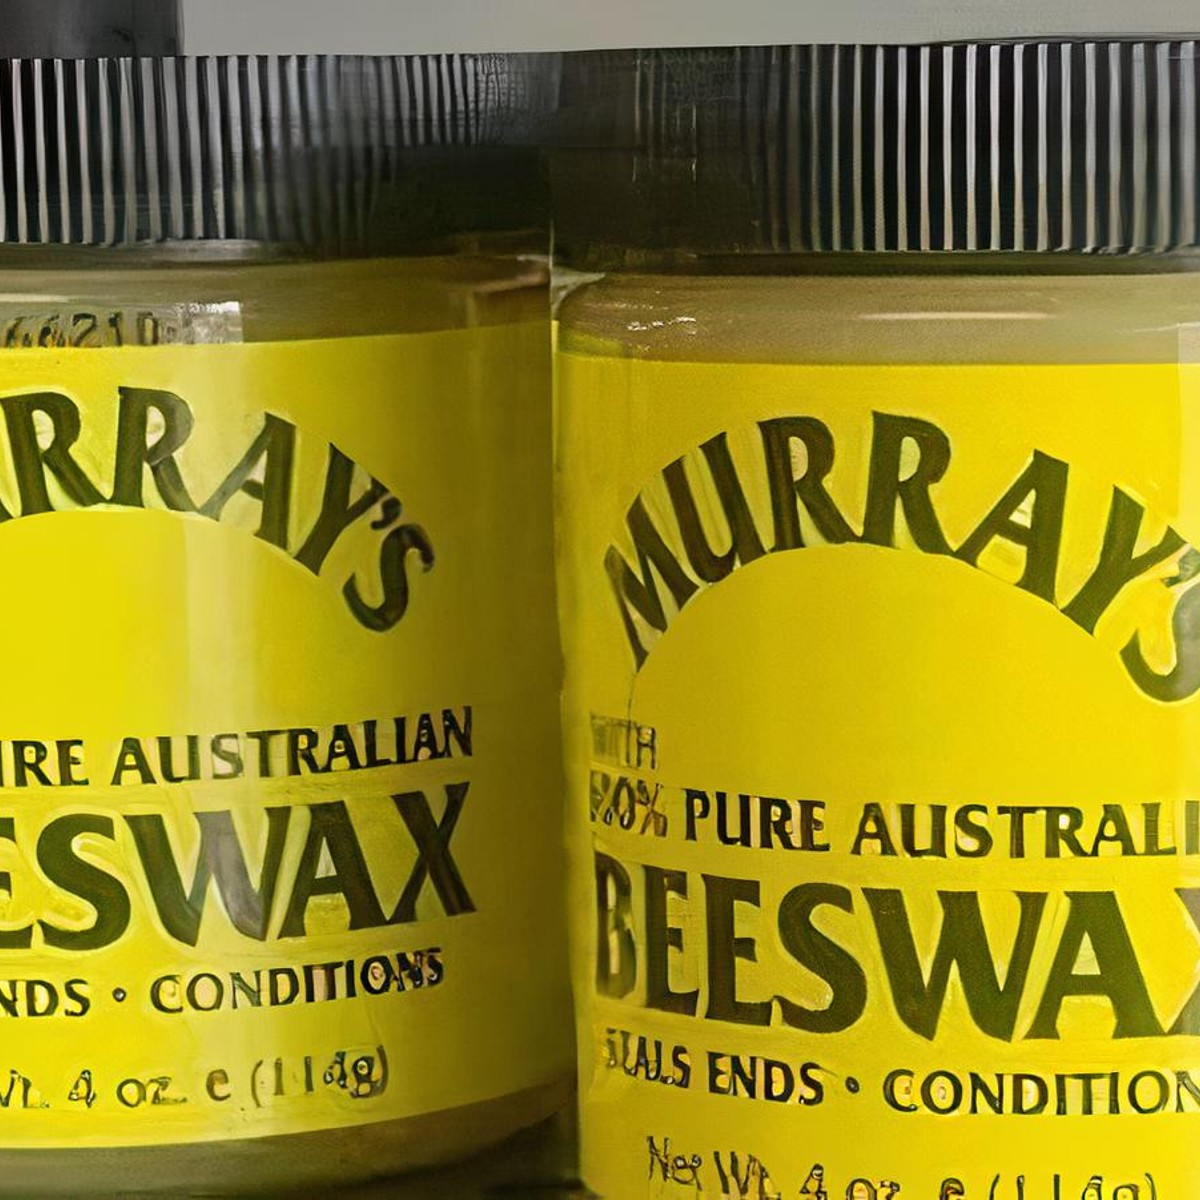 2 pack) Murray's Edge Wax 4 oz 100% Australian Beeswax No Flaking Non  Sticky